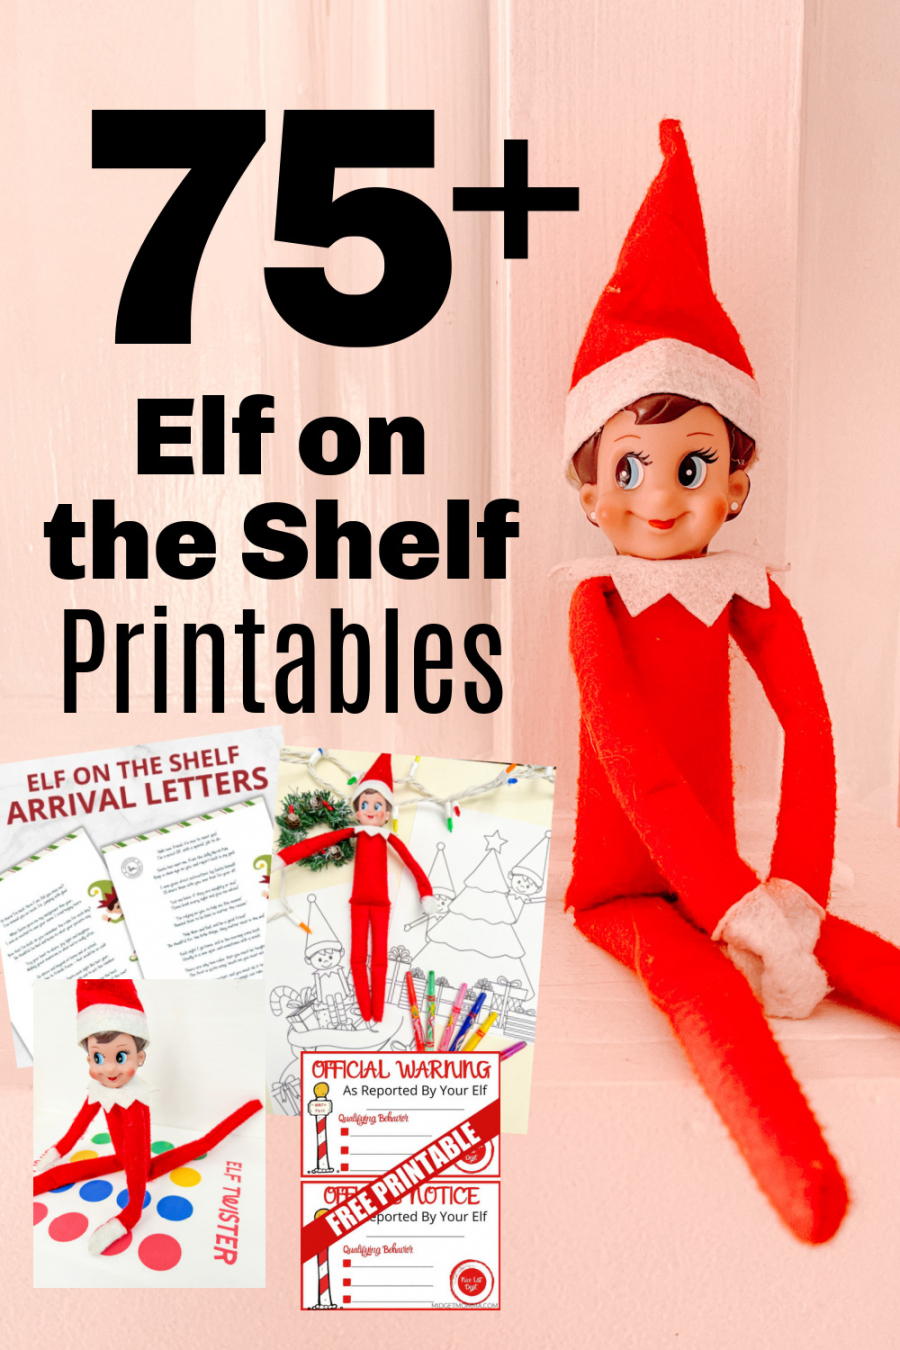 Free Elf On A Shelf Printables - Printable - Ultimate List of FREE Elf on the Shelf Printables - Over